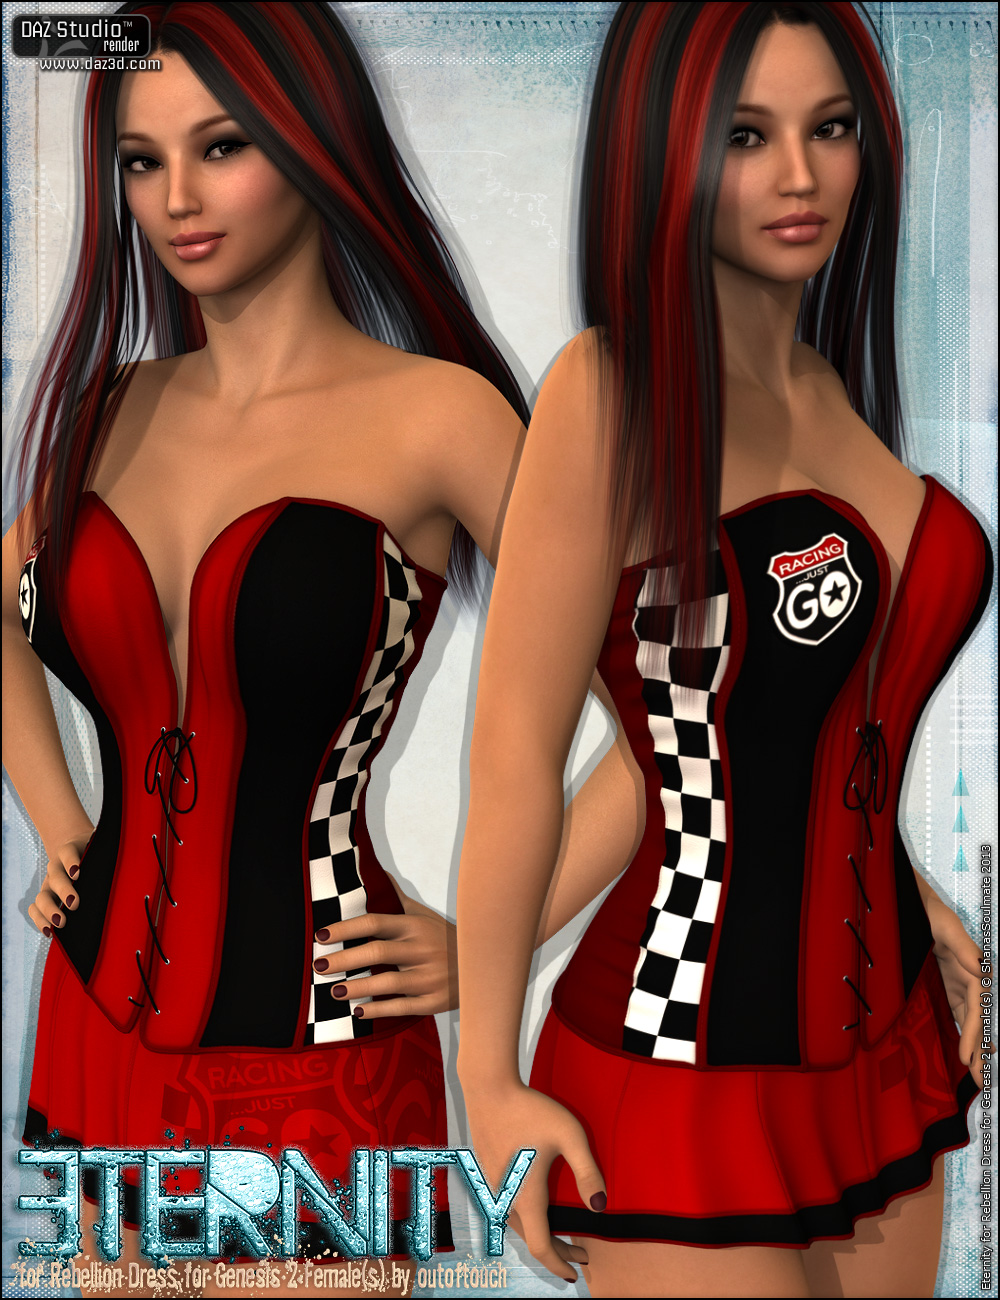 Eternity for Rebellion Dress by: ShanasSoulmate, 3D Models by Daz 3D